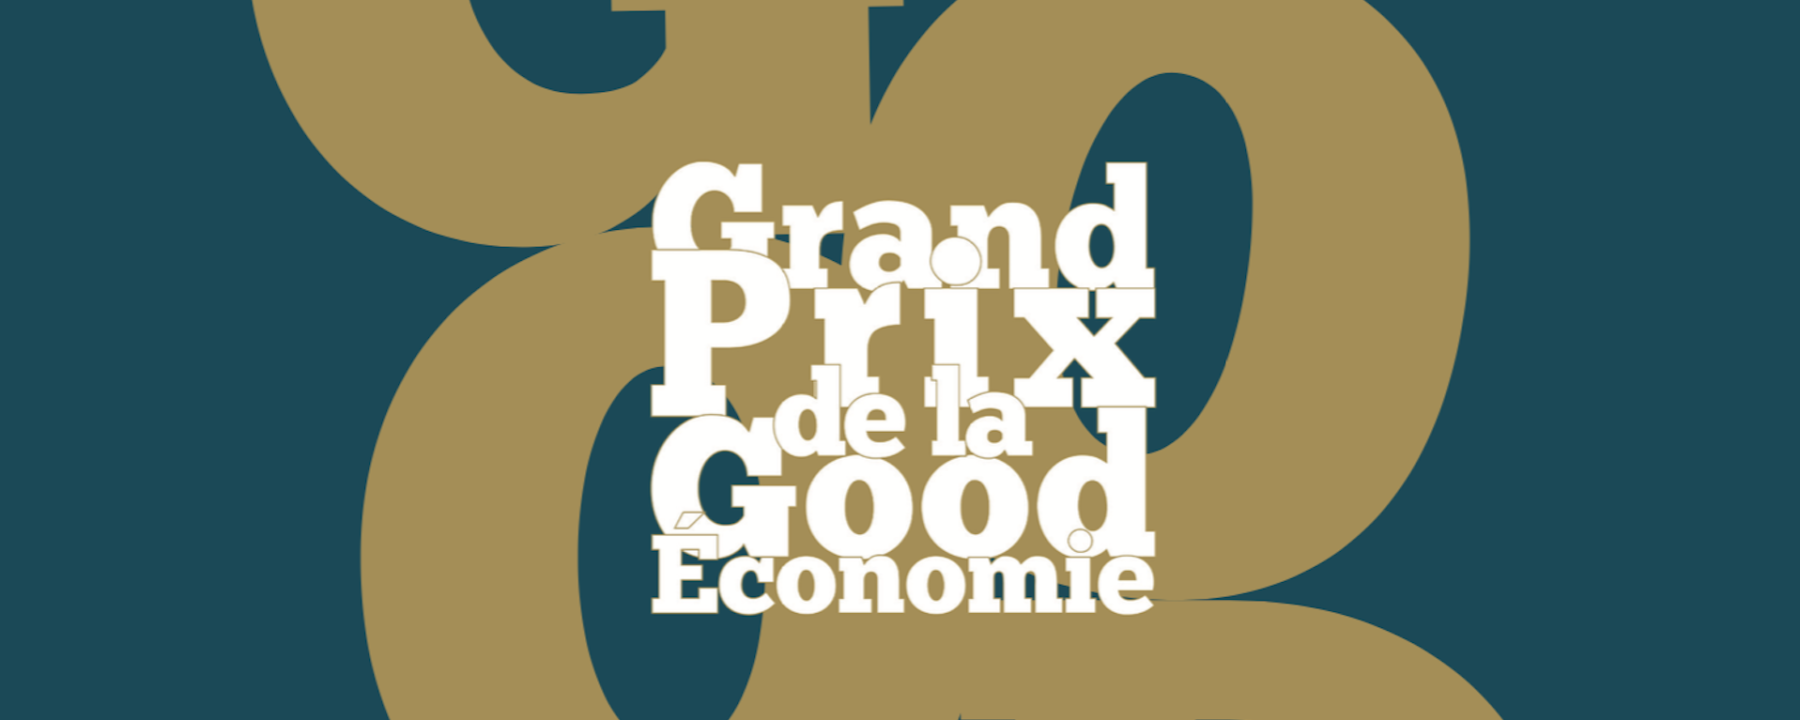 Grand Prix de la good economie